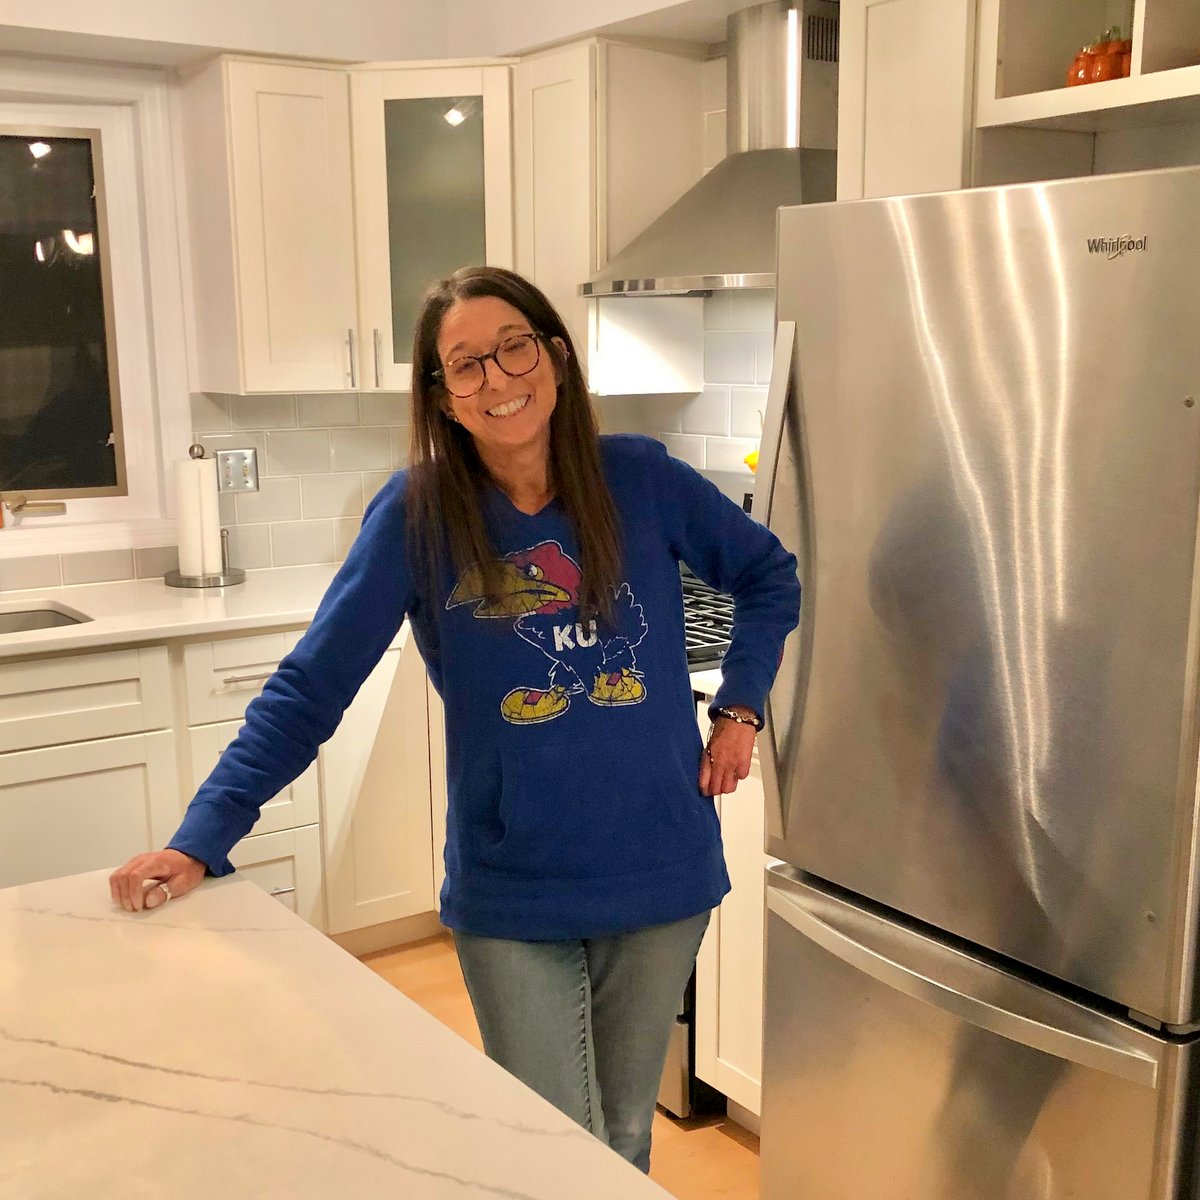 Ann smiling in her kitchen wearing a kansas jayhawks shirt - a favorite sports team